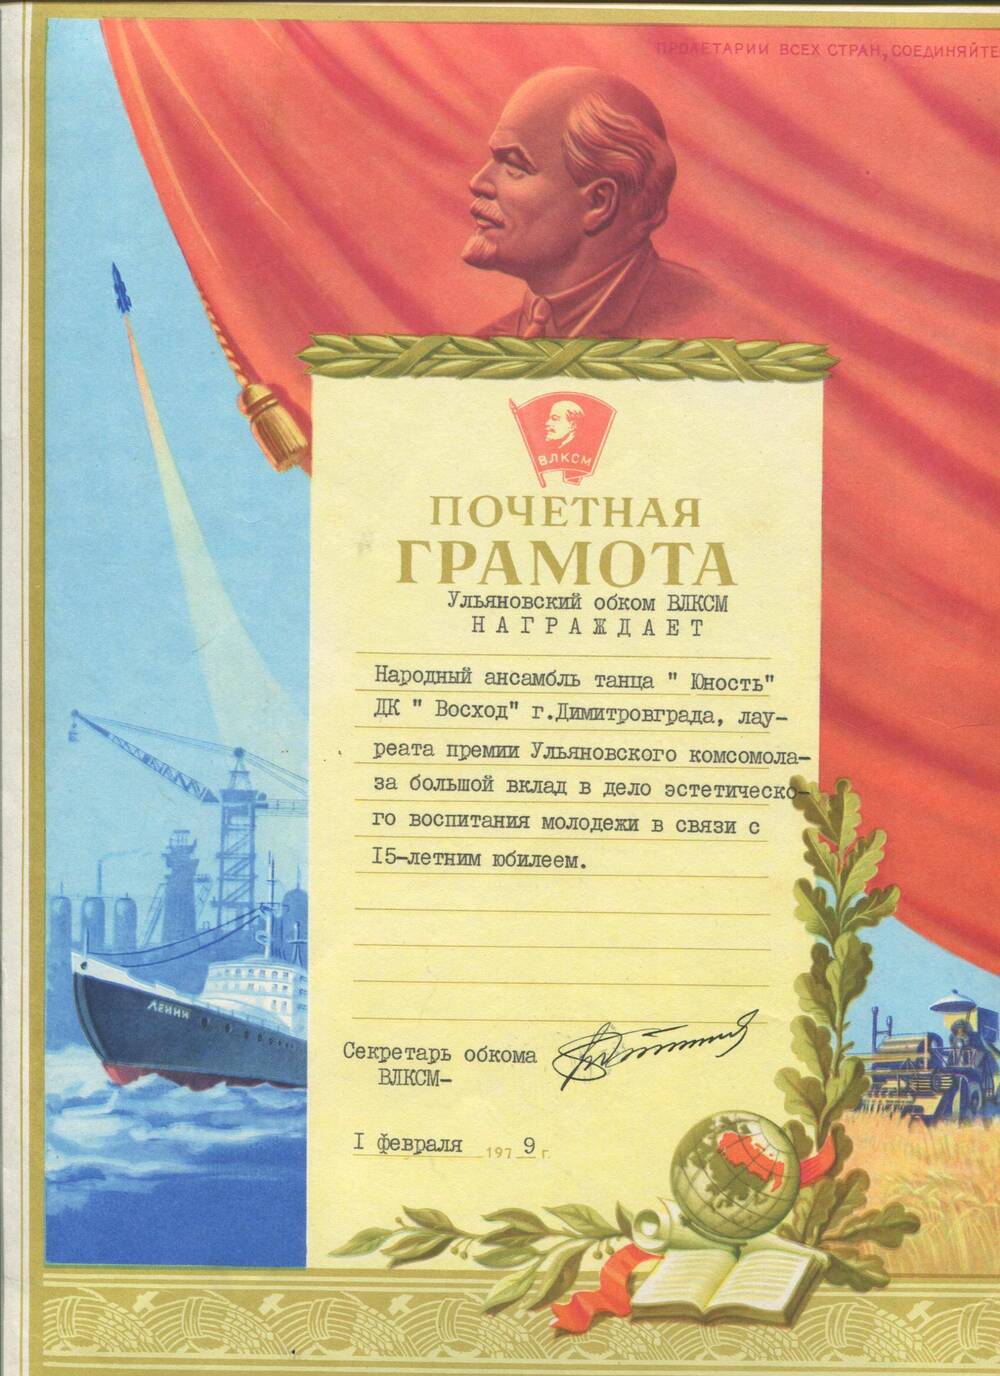 Почетная грамота ансамблю Юность. г.Димитровград, 1 февраля 1979 г.